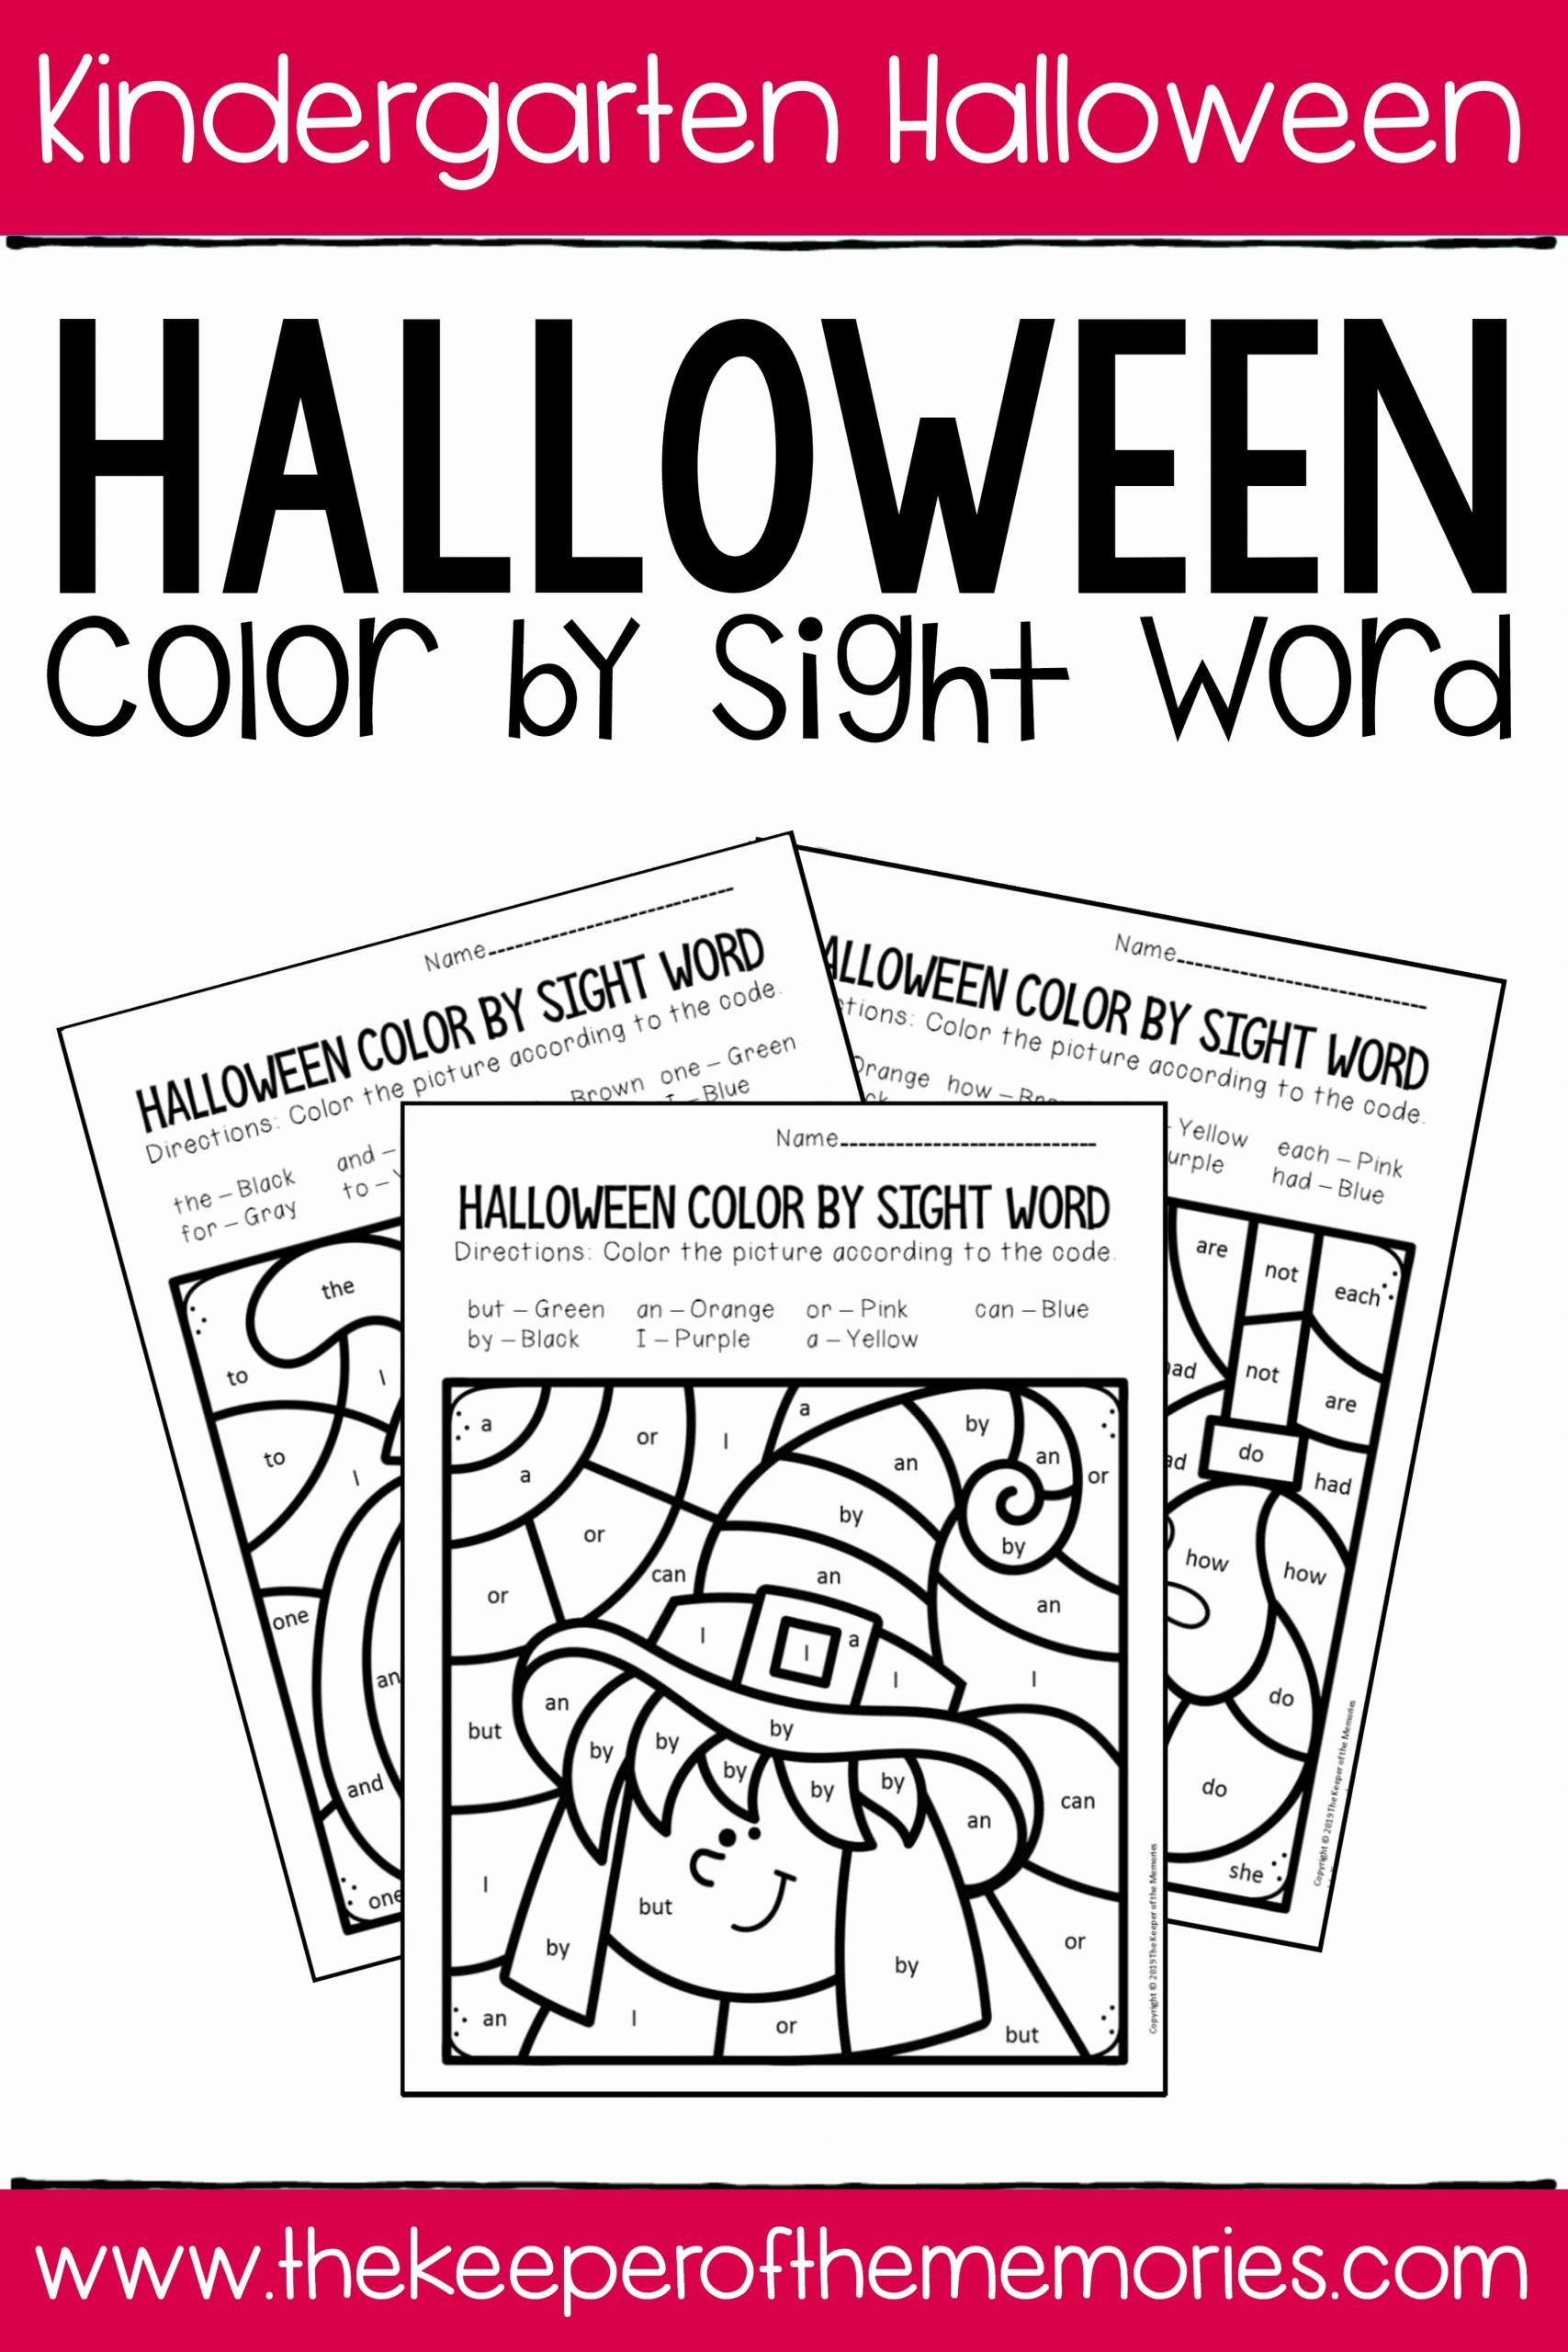 Free Kindergarten Halloween Worksheets Printable Luxury Color by Sight Word Halloween Kindergarten Worksheets